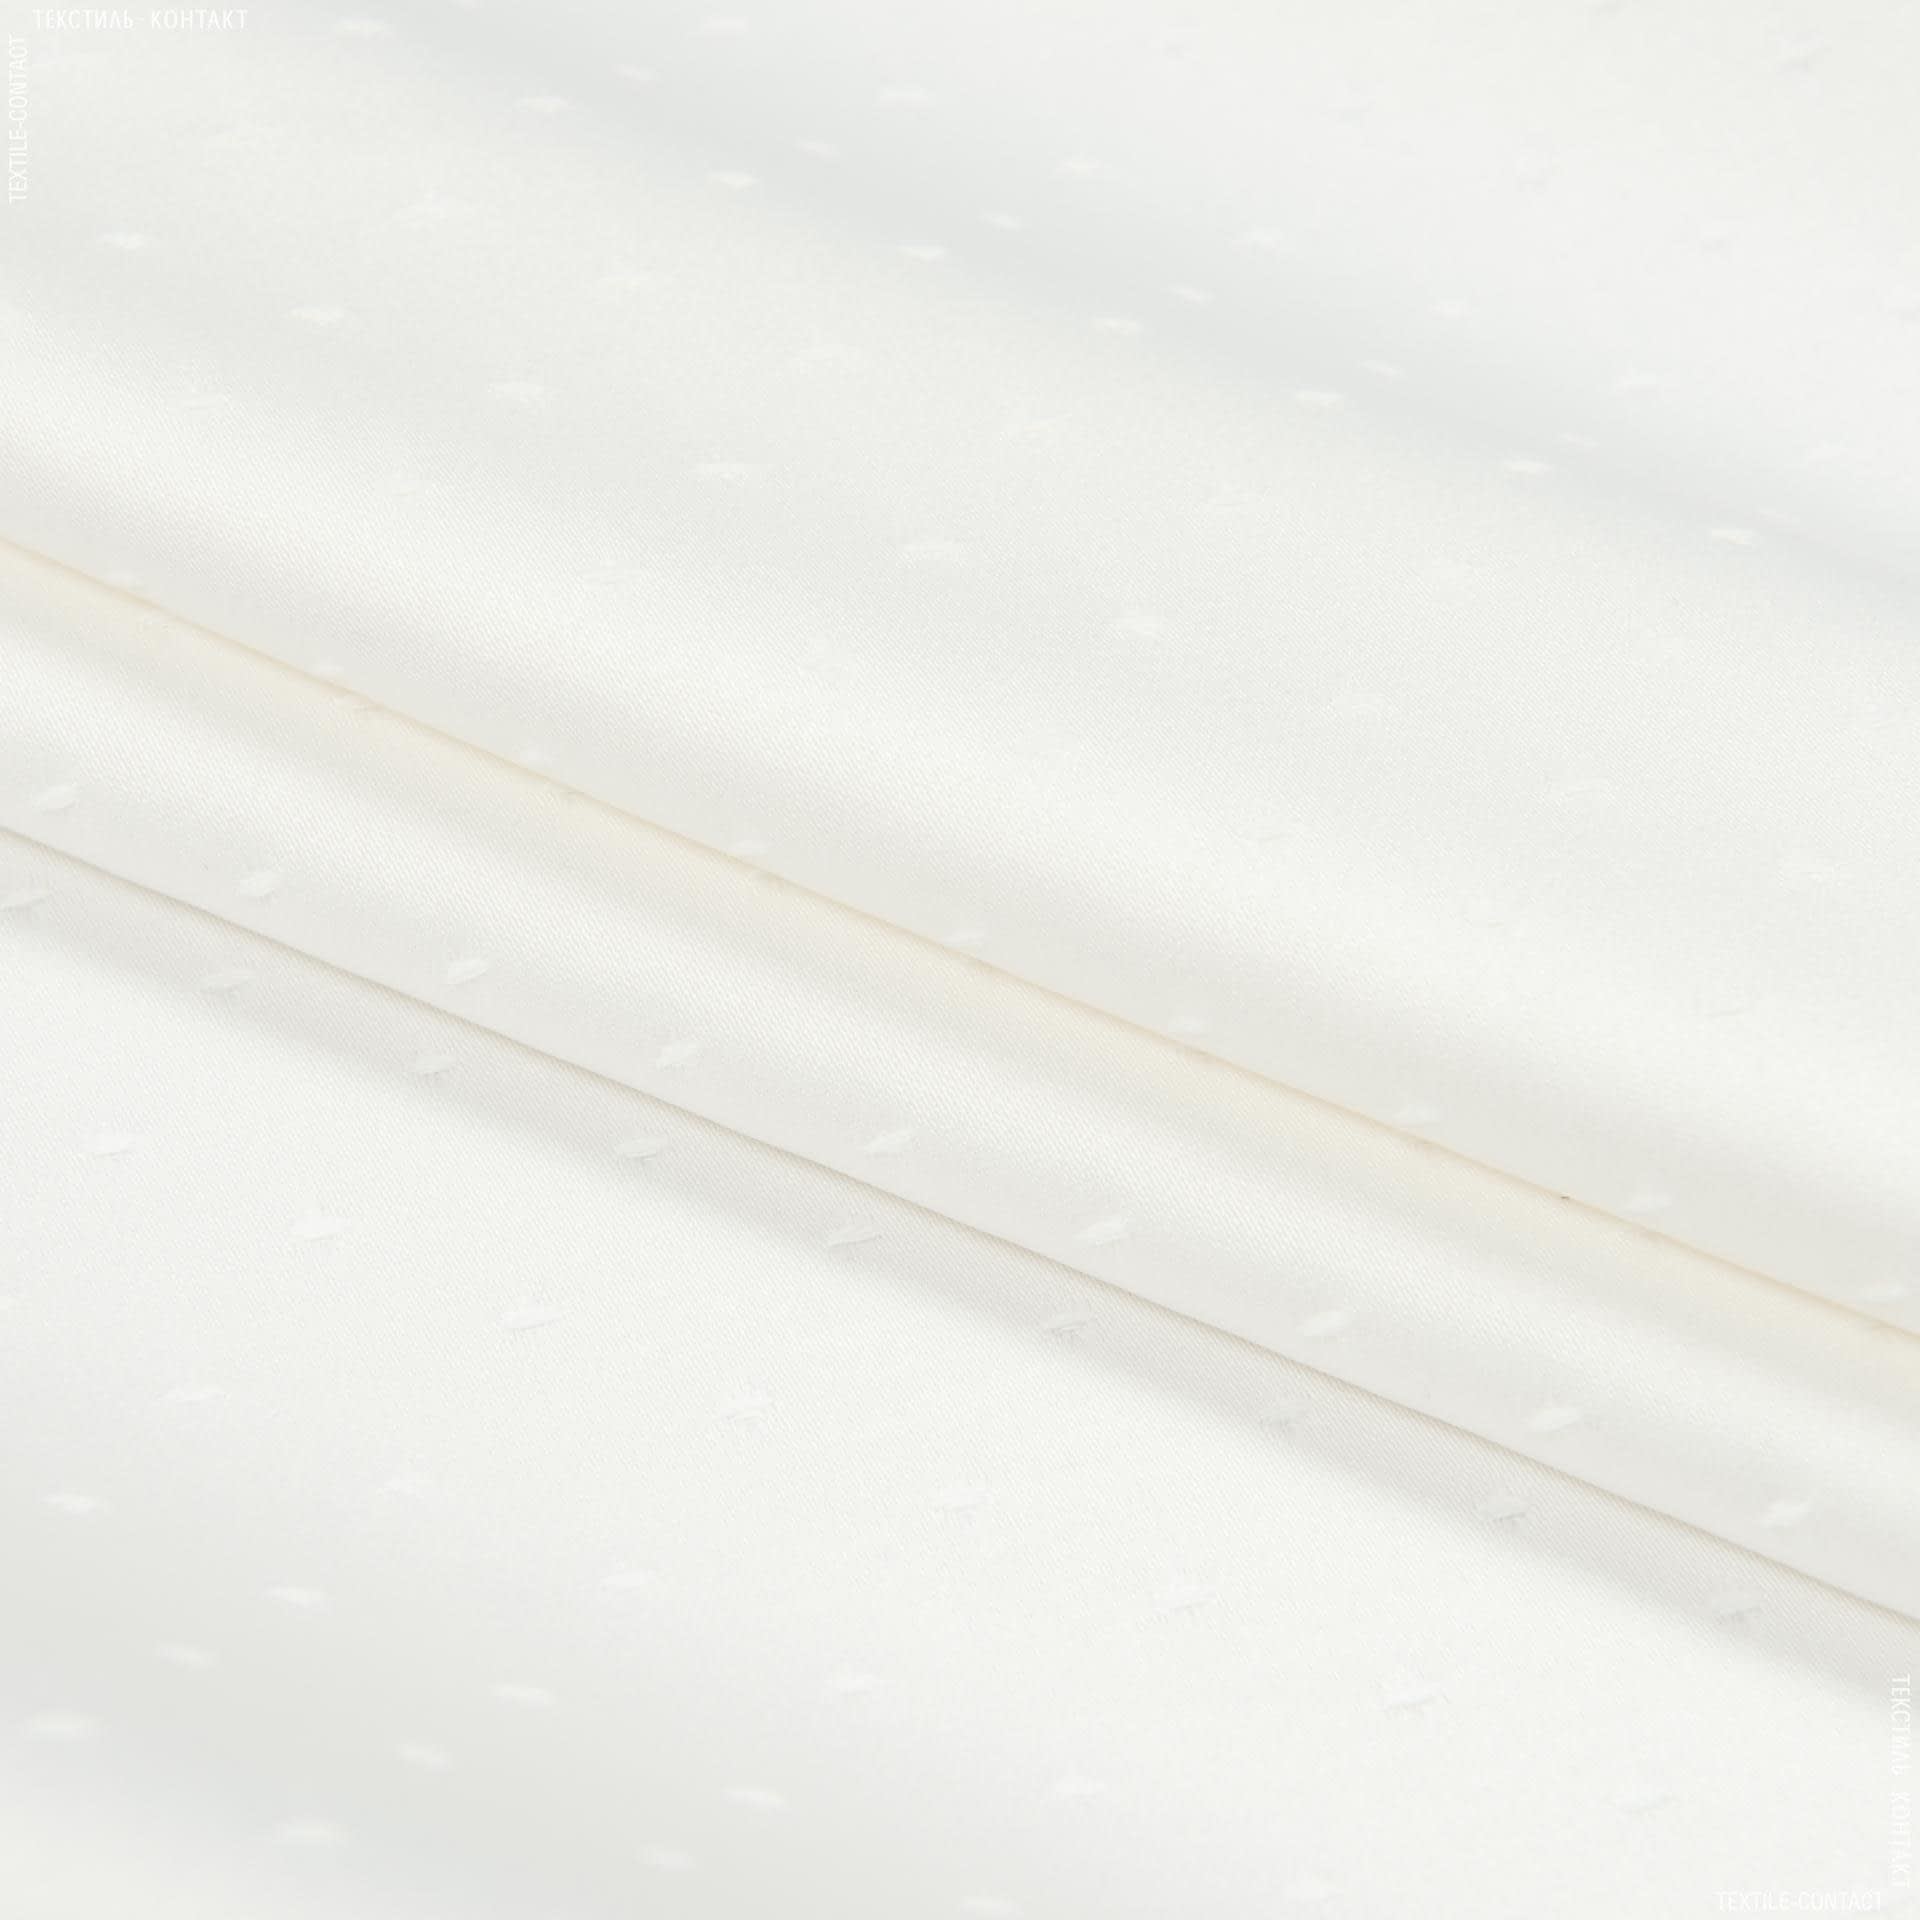 Ткани horeca - Скатертная ткань сена-2 мелкая/siene  молочный